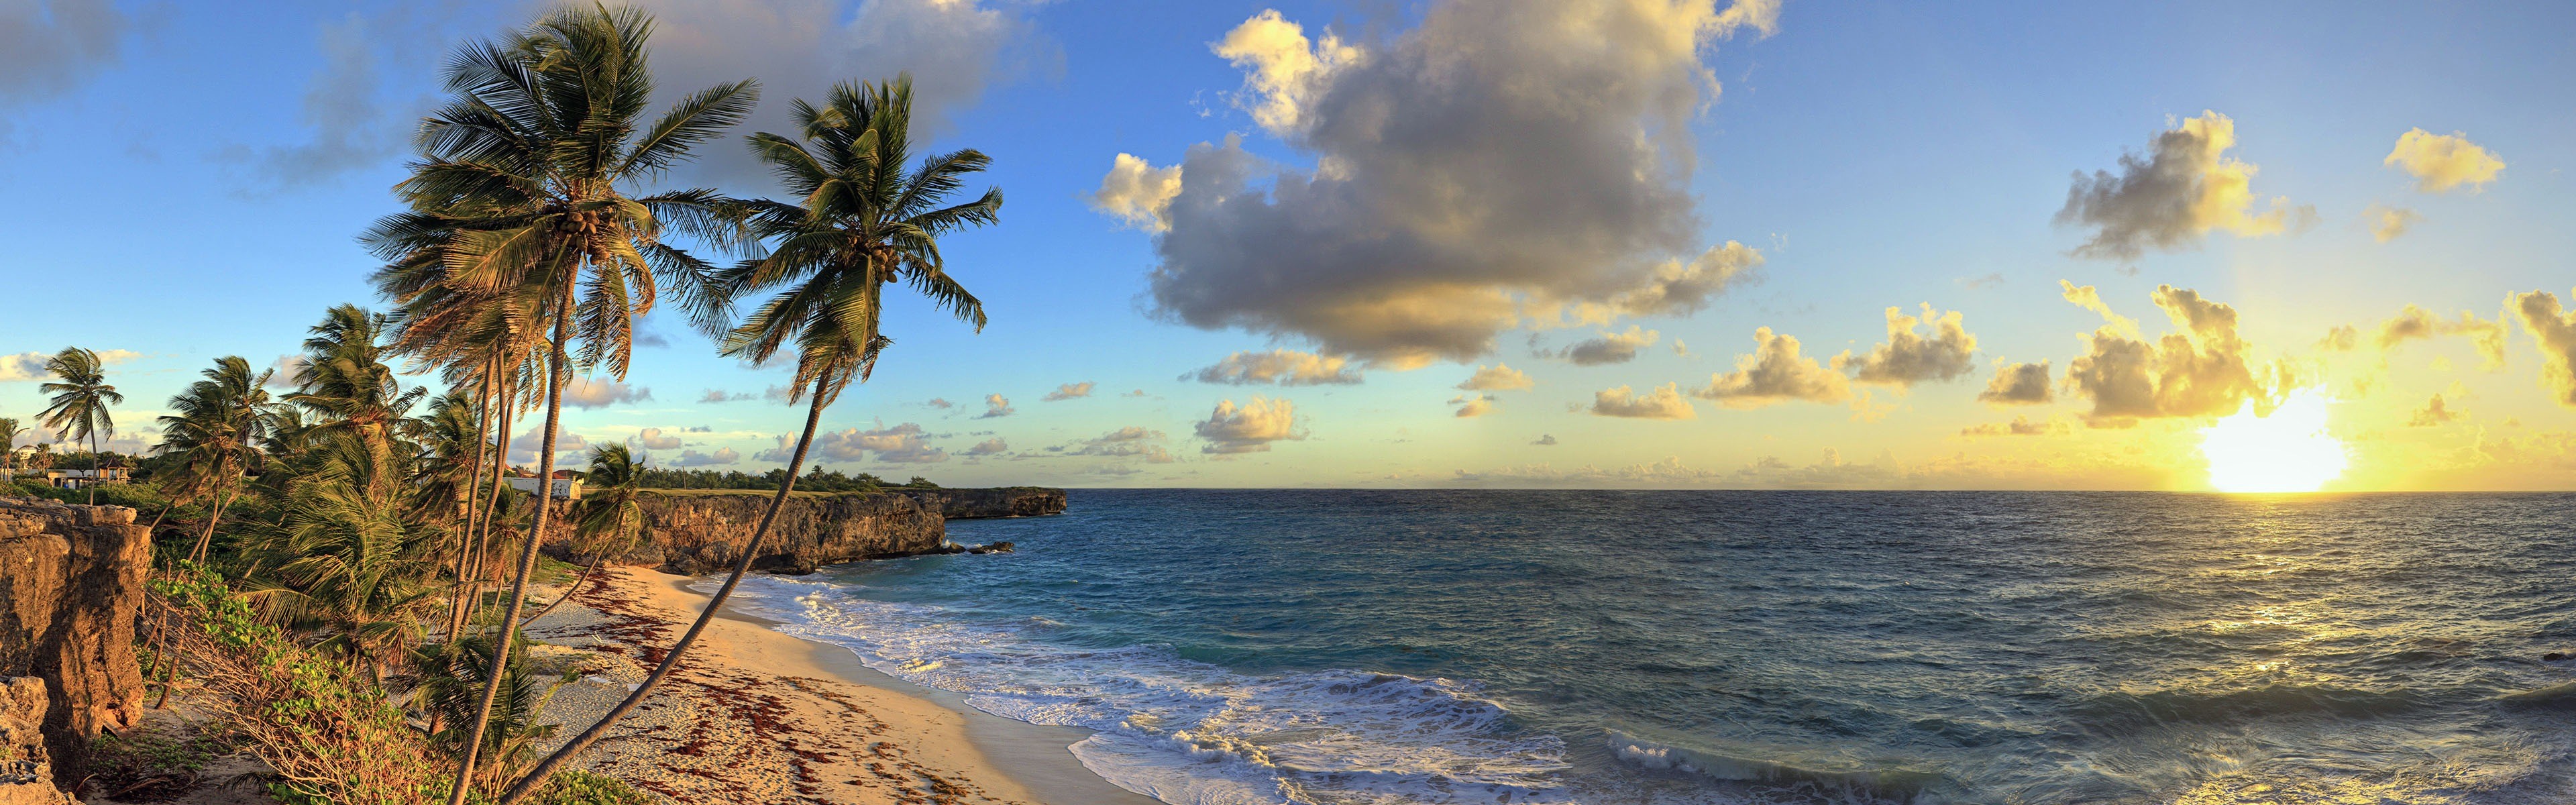 3840x1200 Beautiful beach sunset, Windows 8 panoramic widescreen wallpapers #6 -  .